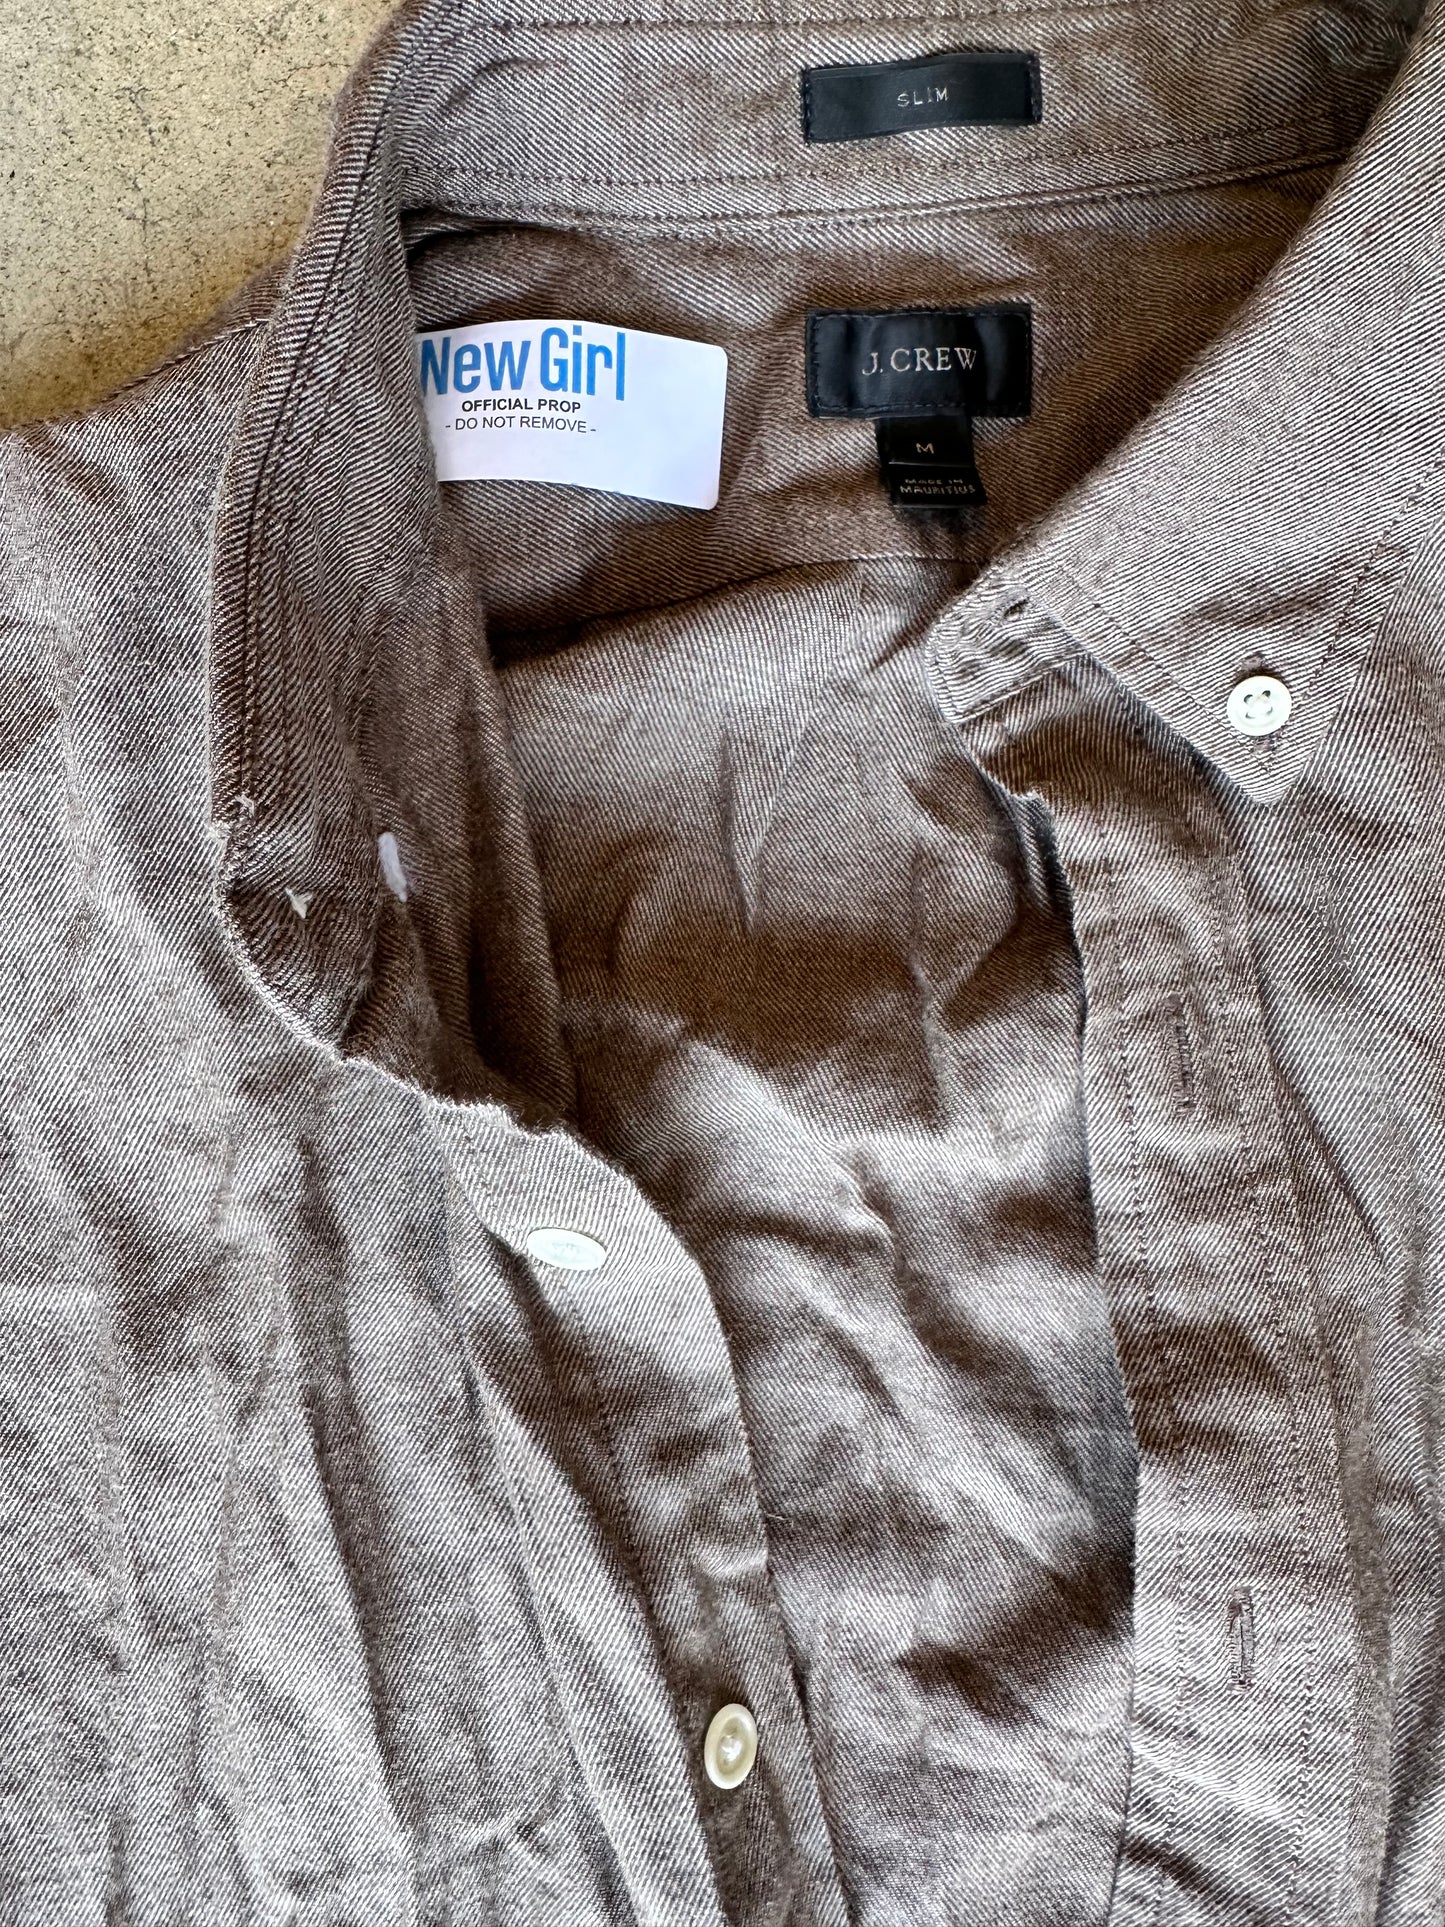 NEW GIRL: Nick's J Crew Brown Long Sleeve Button Down Shirt (M)